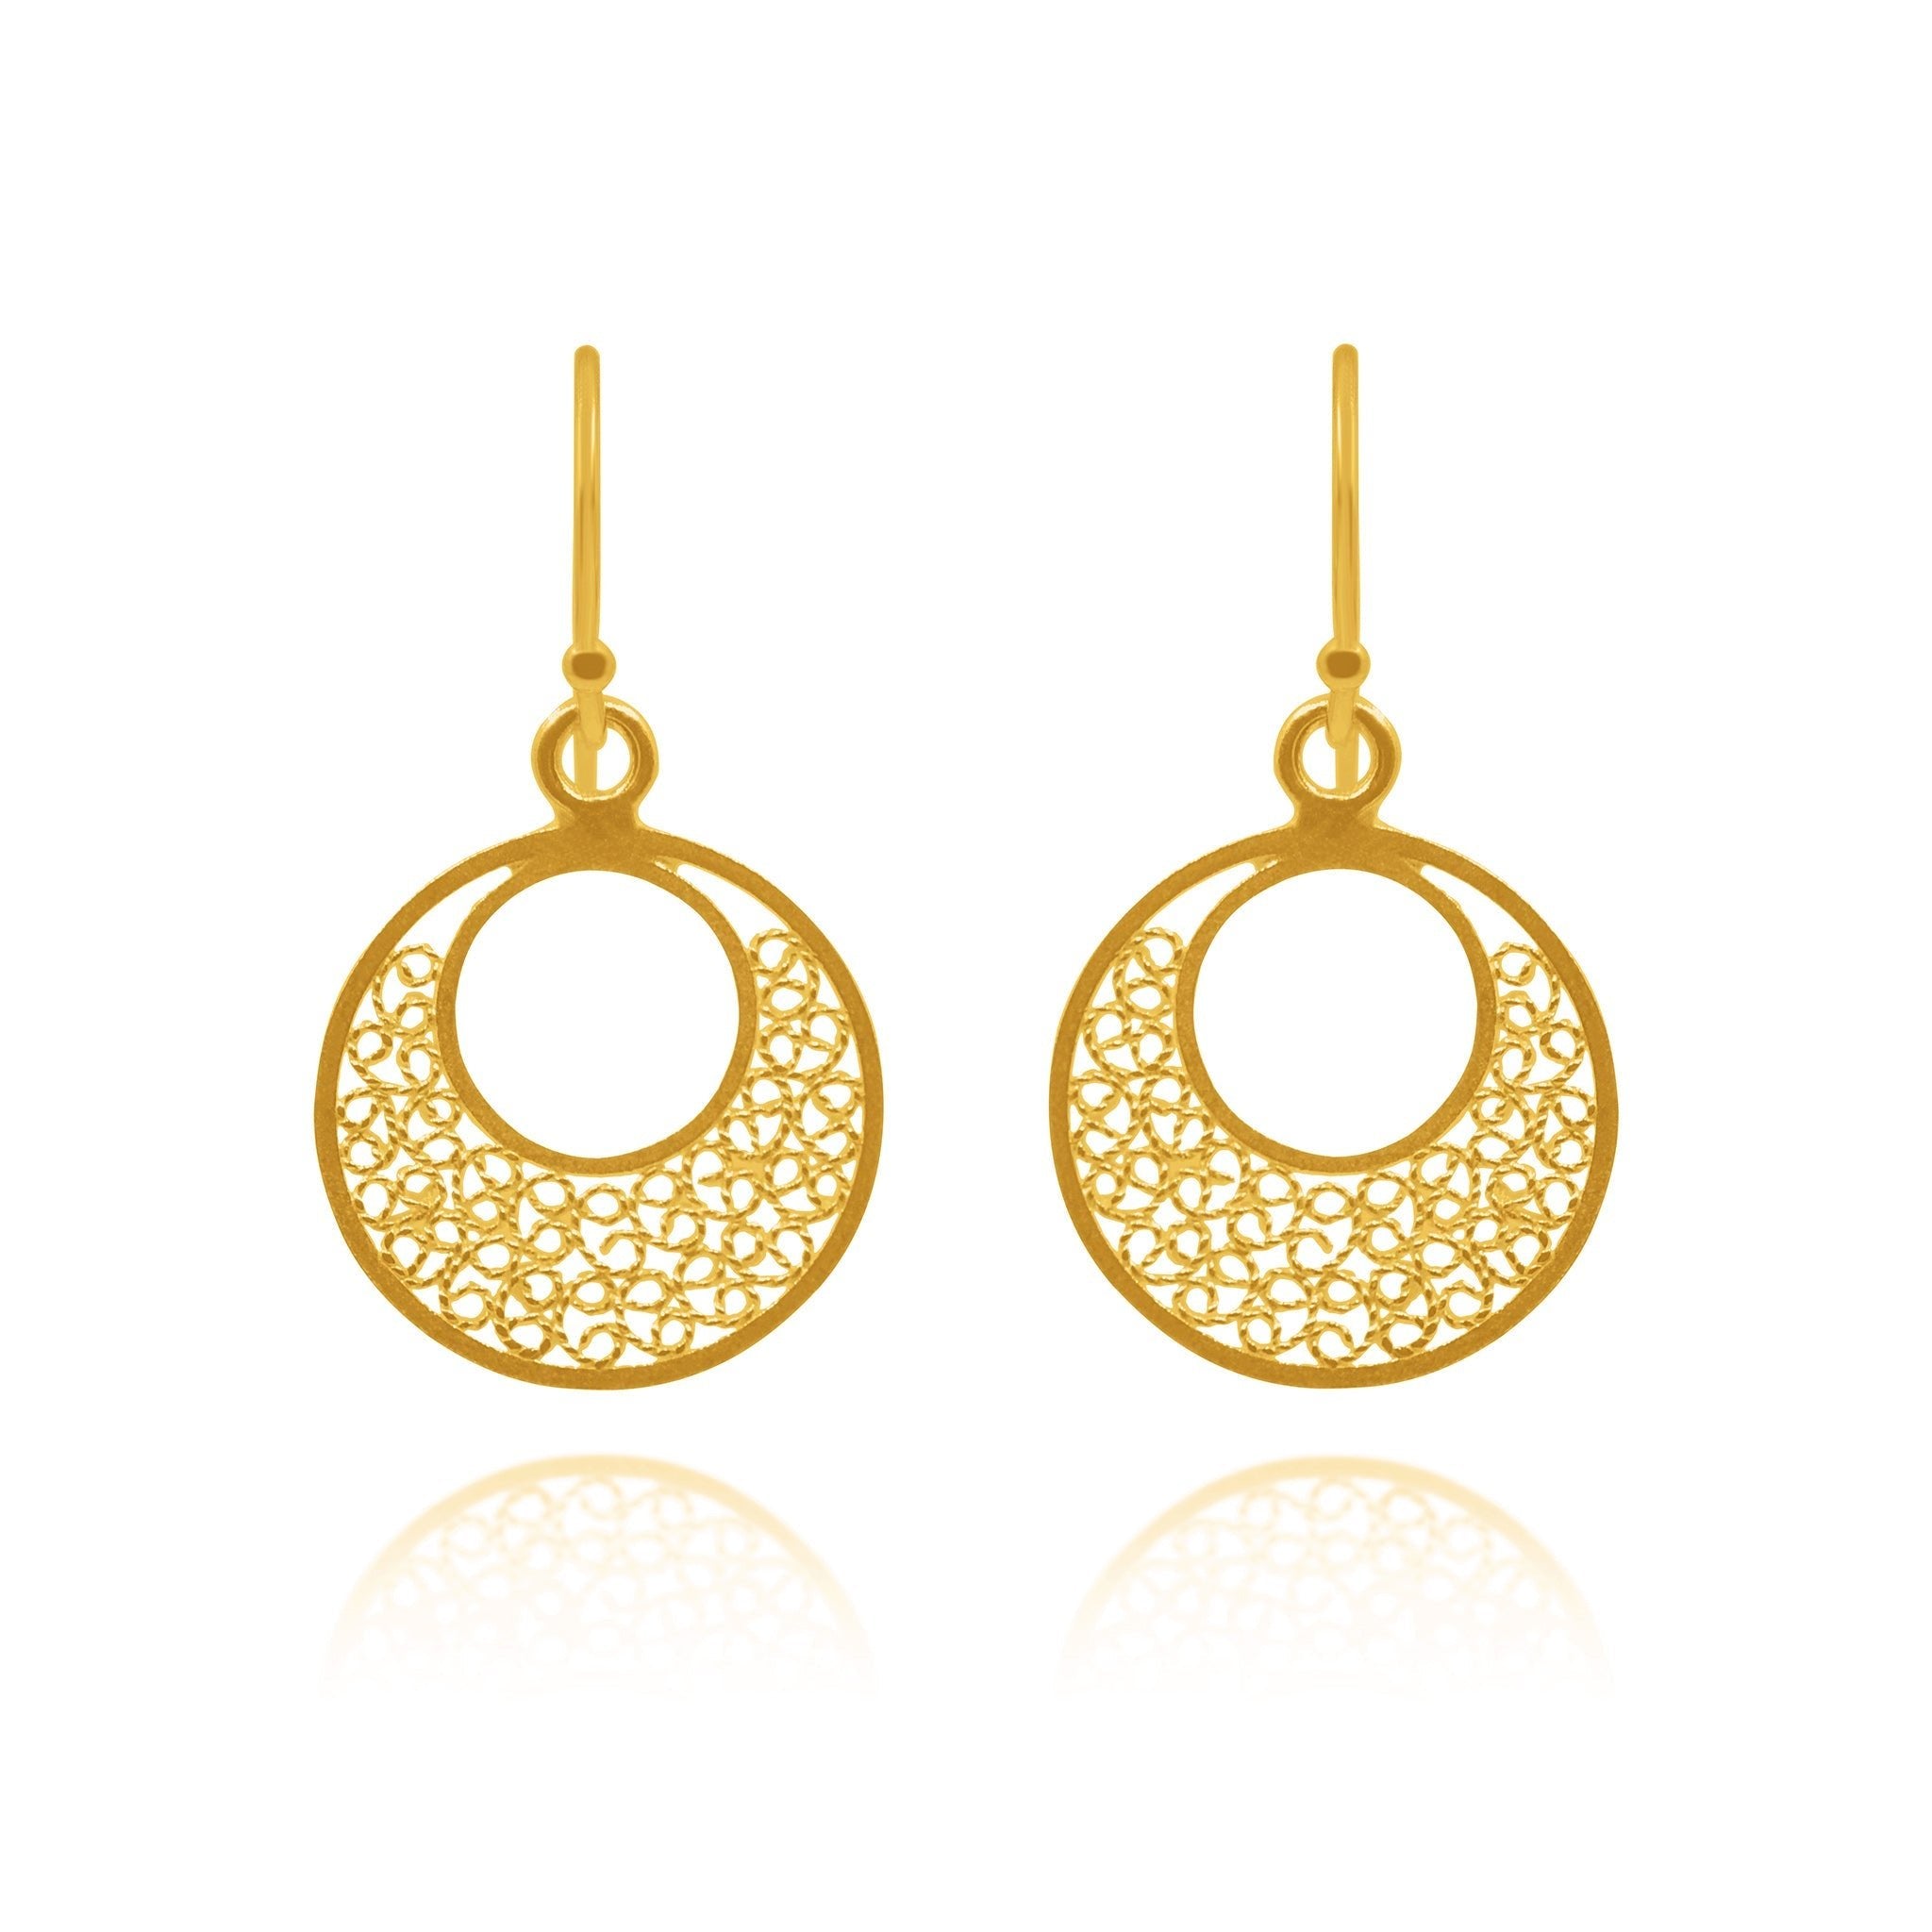 Pile 18k Gold Vermeil Plated Filigree Earrings - Earrings